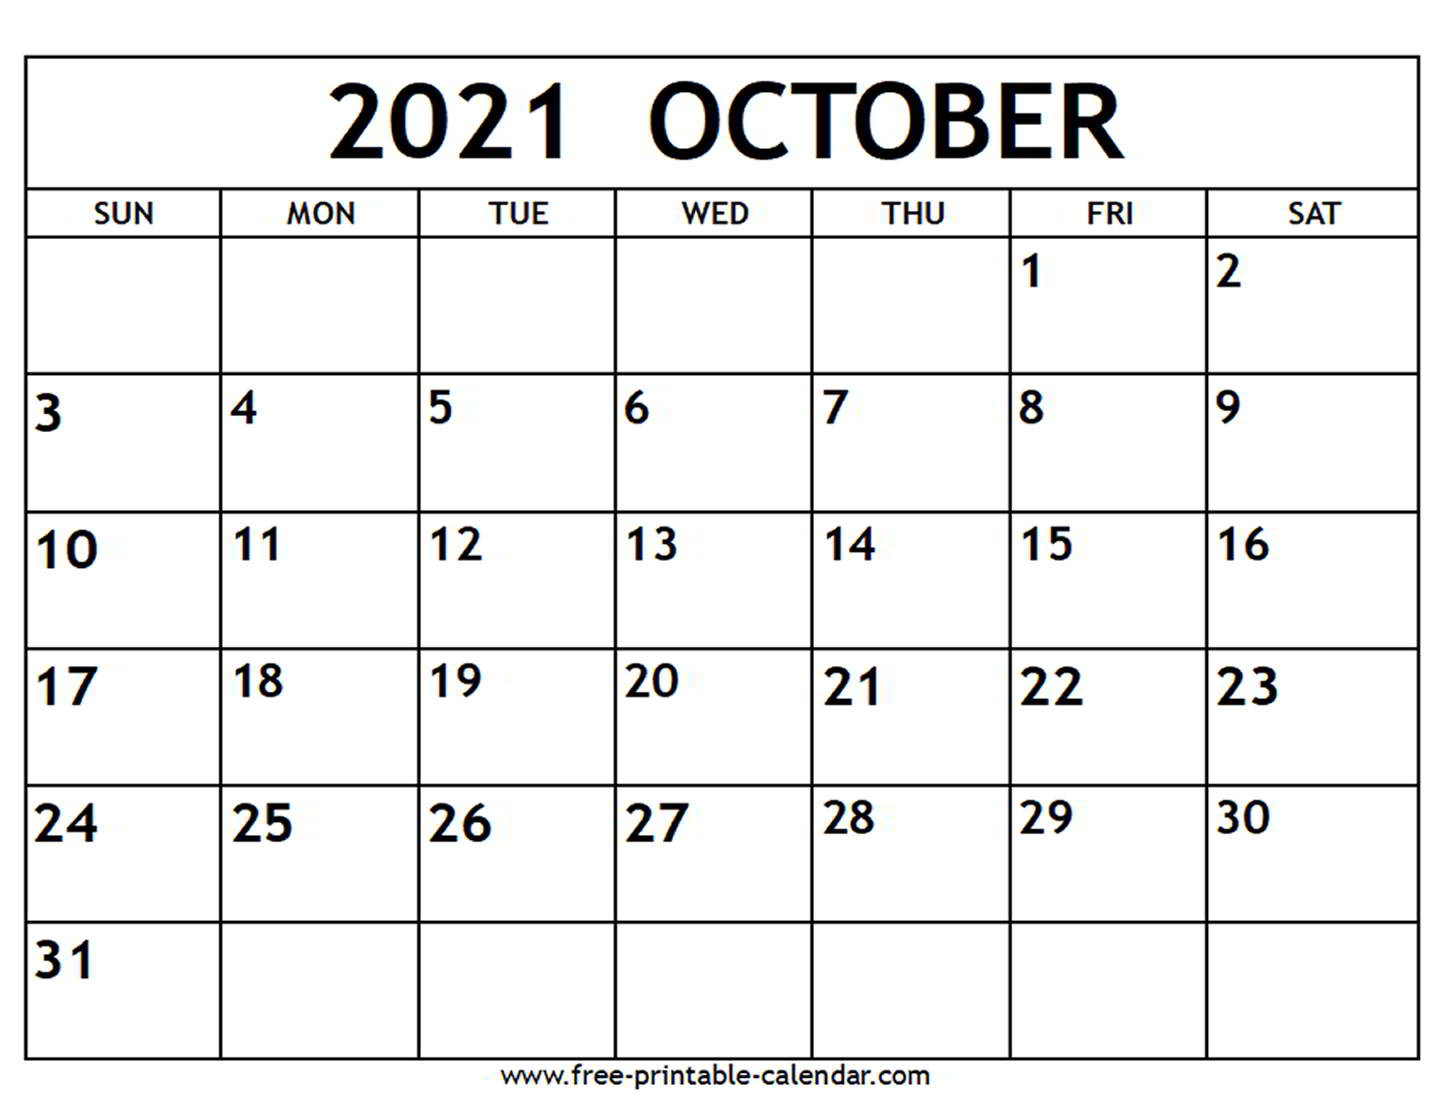 October 2021 Calendar - Free-Printable-Calendar-Monthly Schedule Planner August 2021